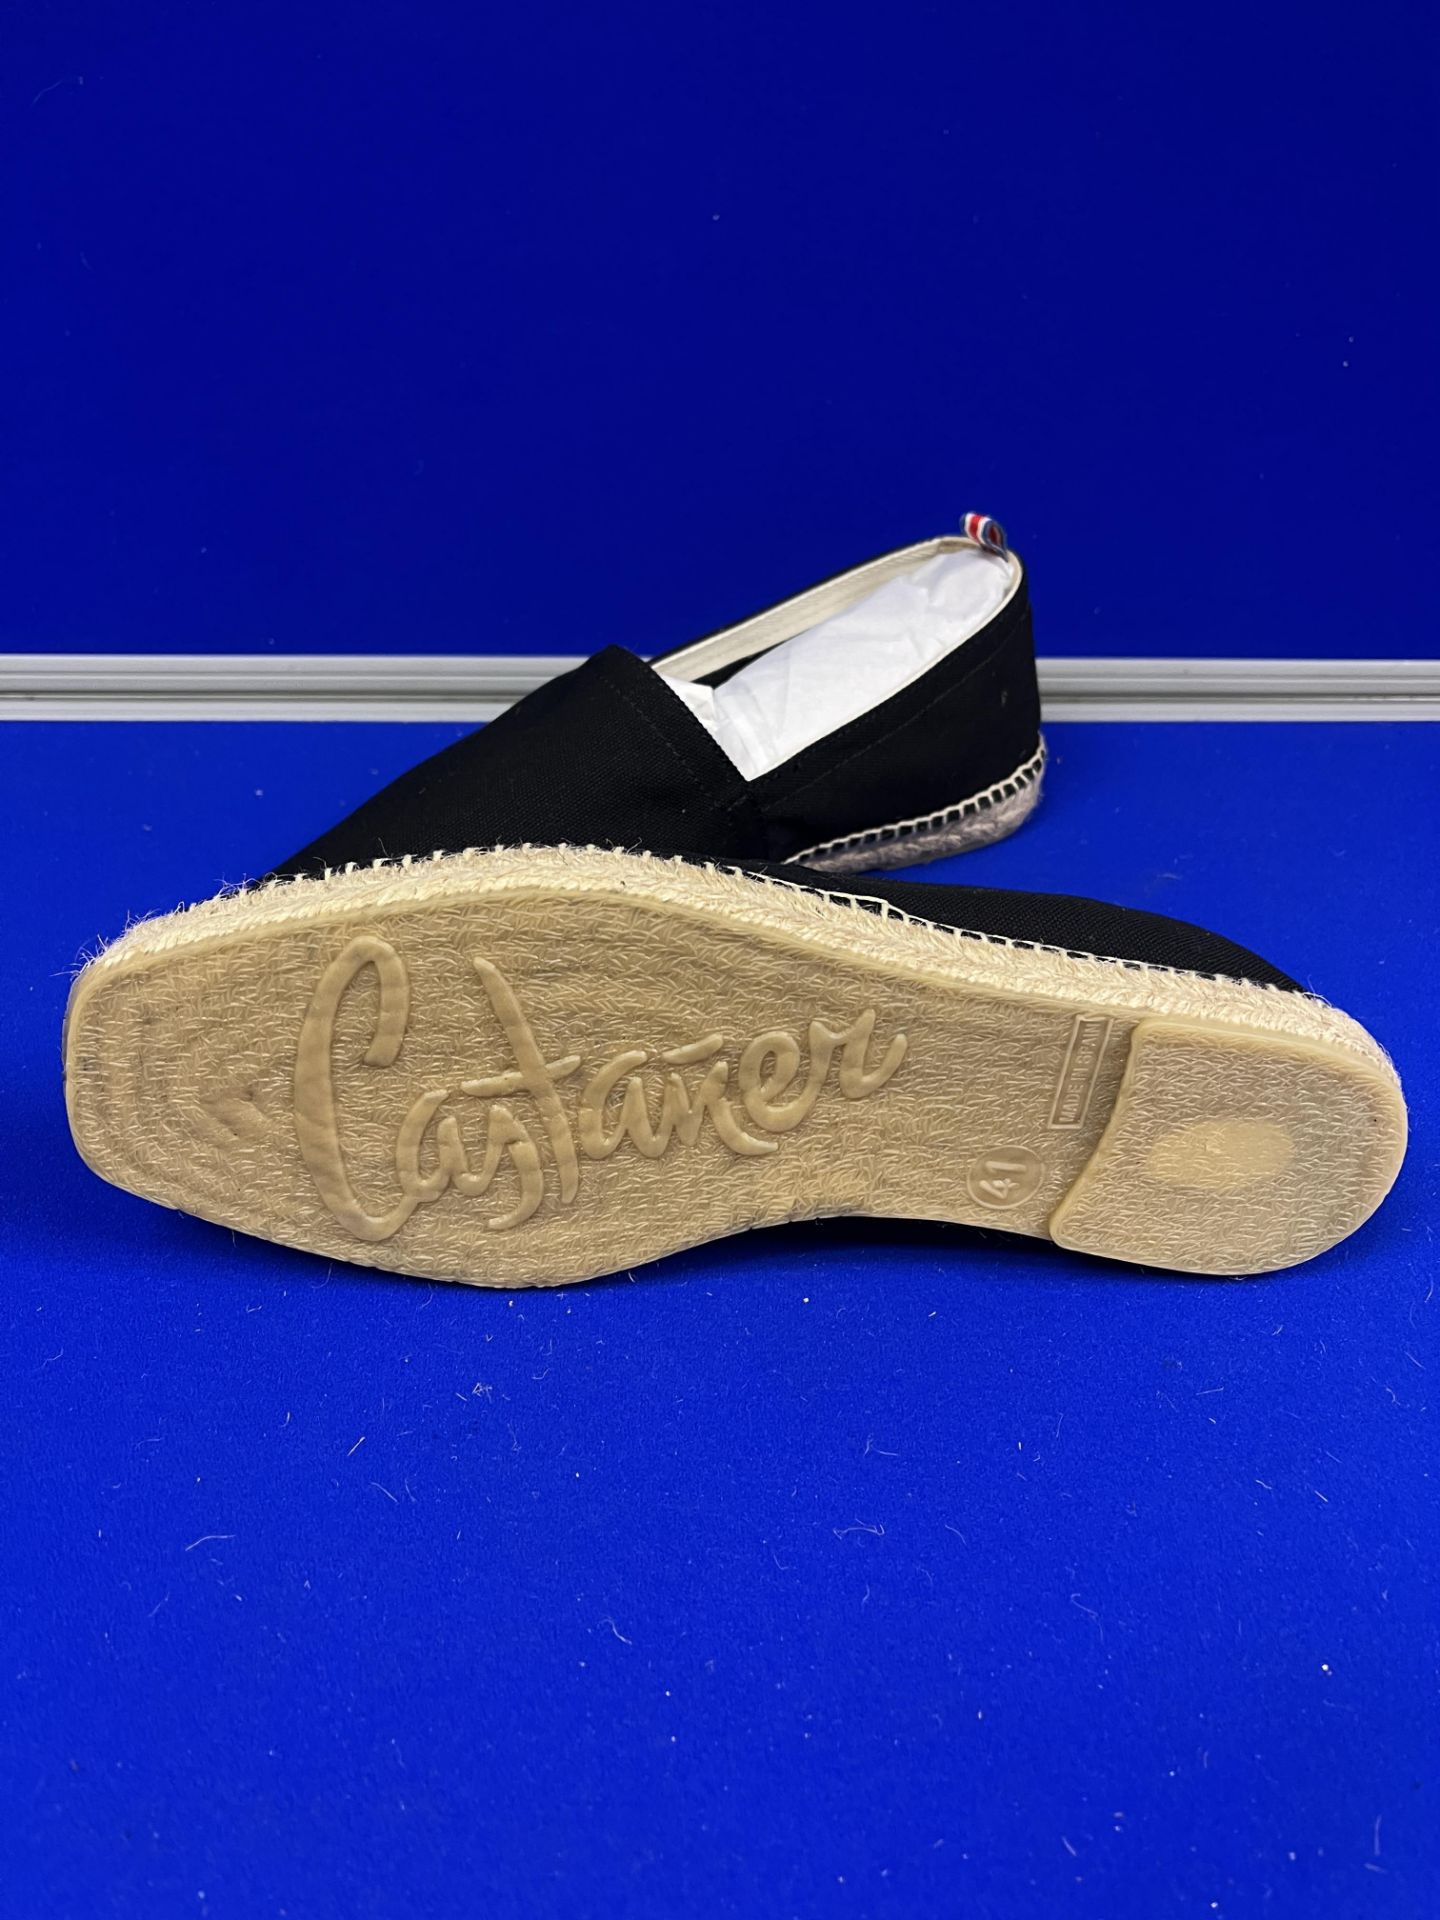 9 x Castaner Slip On Shoes - Size EU41 - Image 8 of 18